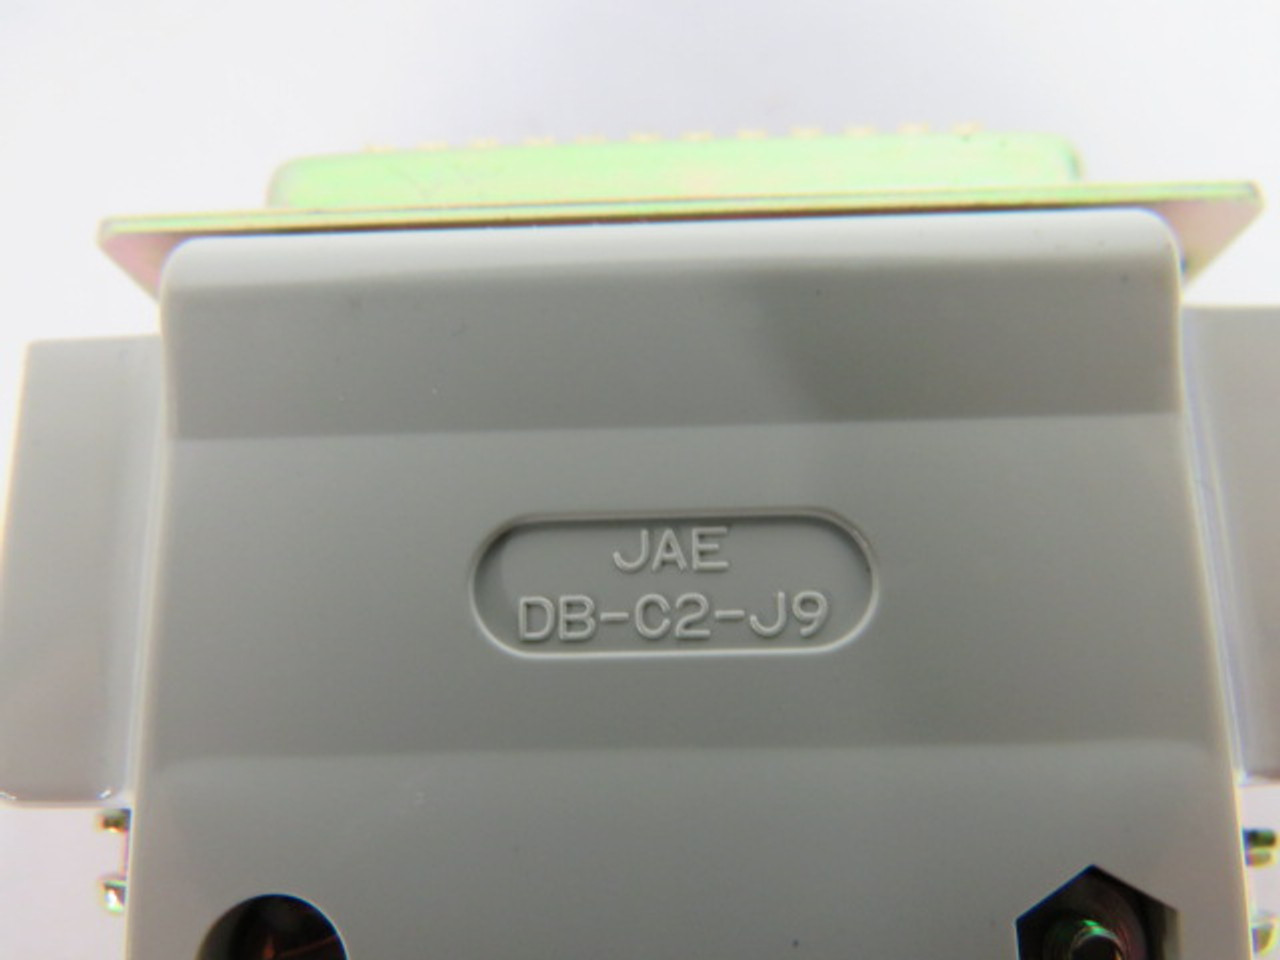 JAE Connectors DB-C2-J9 25 Pin Connector USED